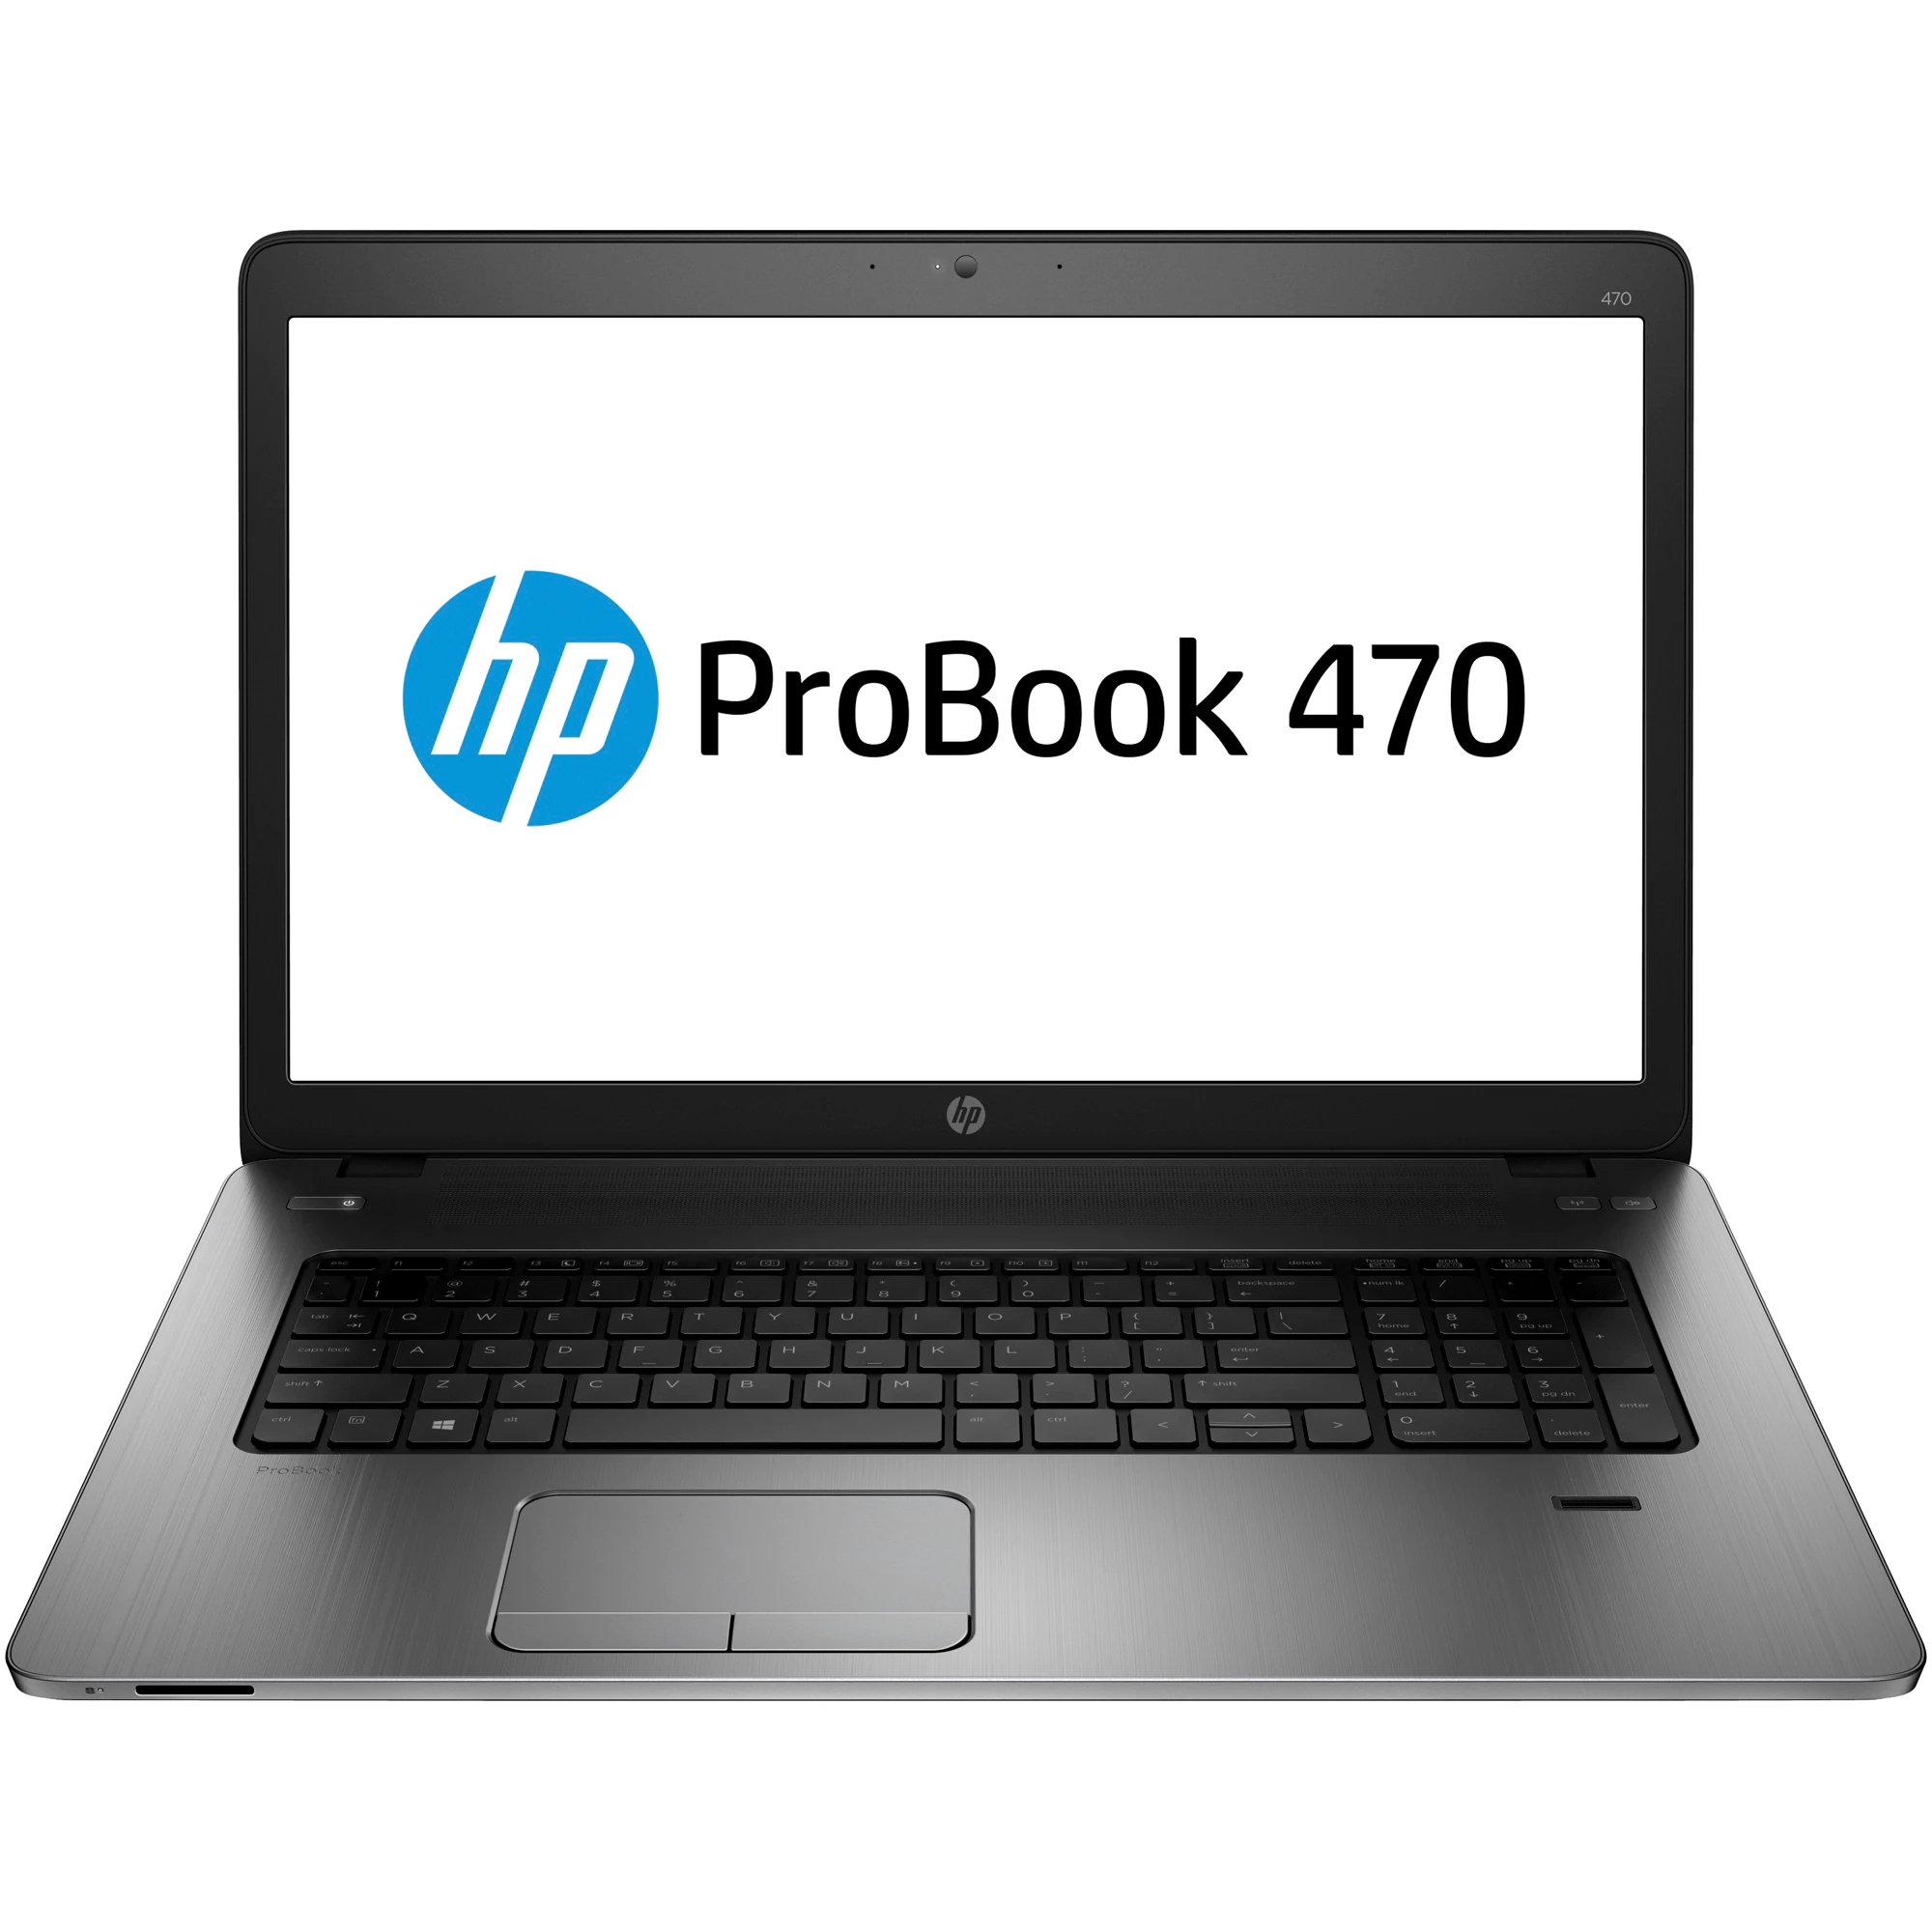 Laptop HP ProBook 470 G2, Intel Core i5-5200U 2.20GHz, 4GB DDR3, 120GB SSD, DVD-RW, 17.3 Inch, Webcam, Tastatura Numerica, Grad B